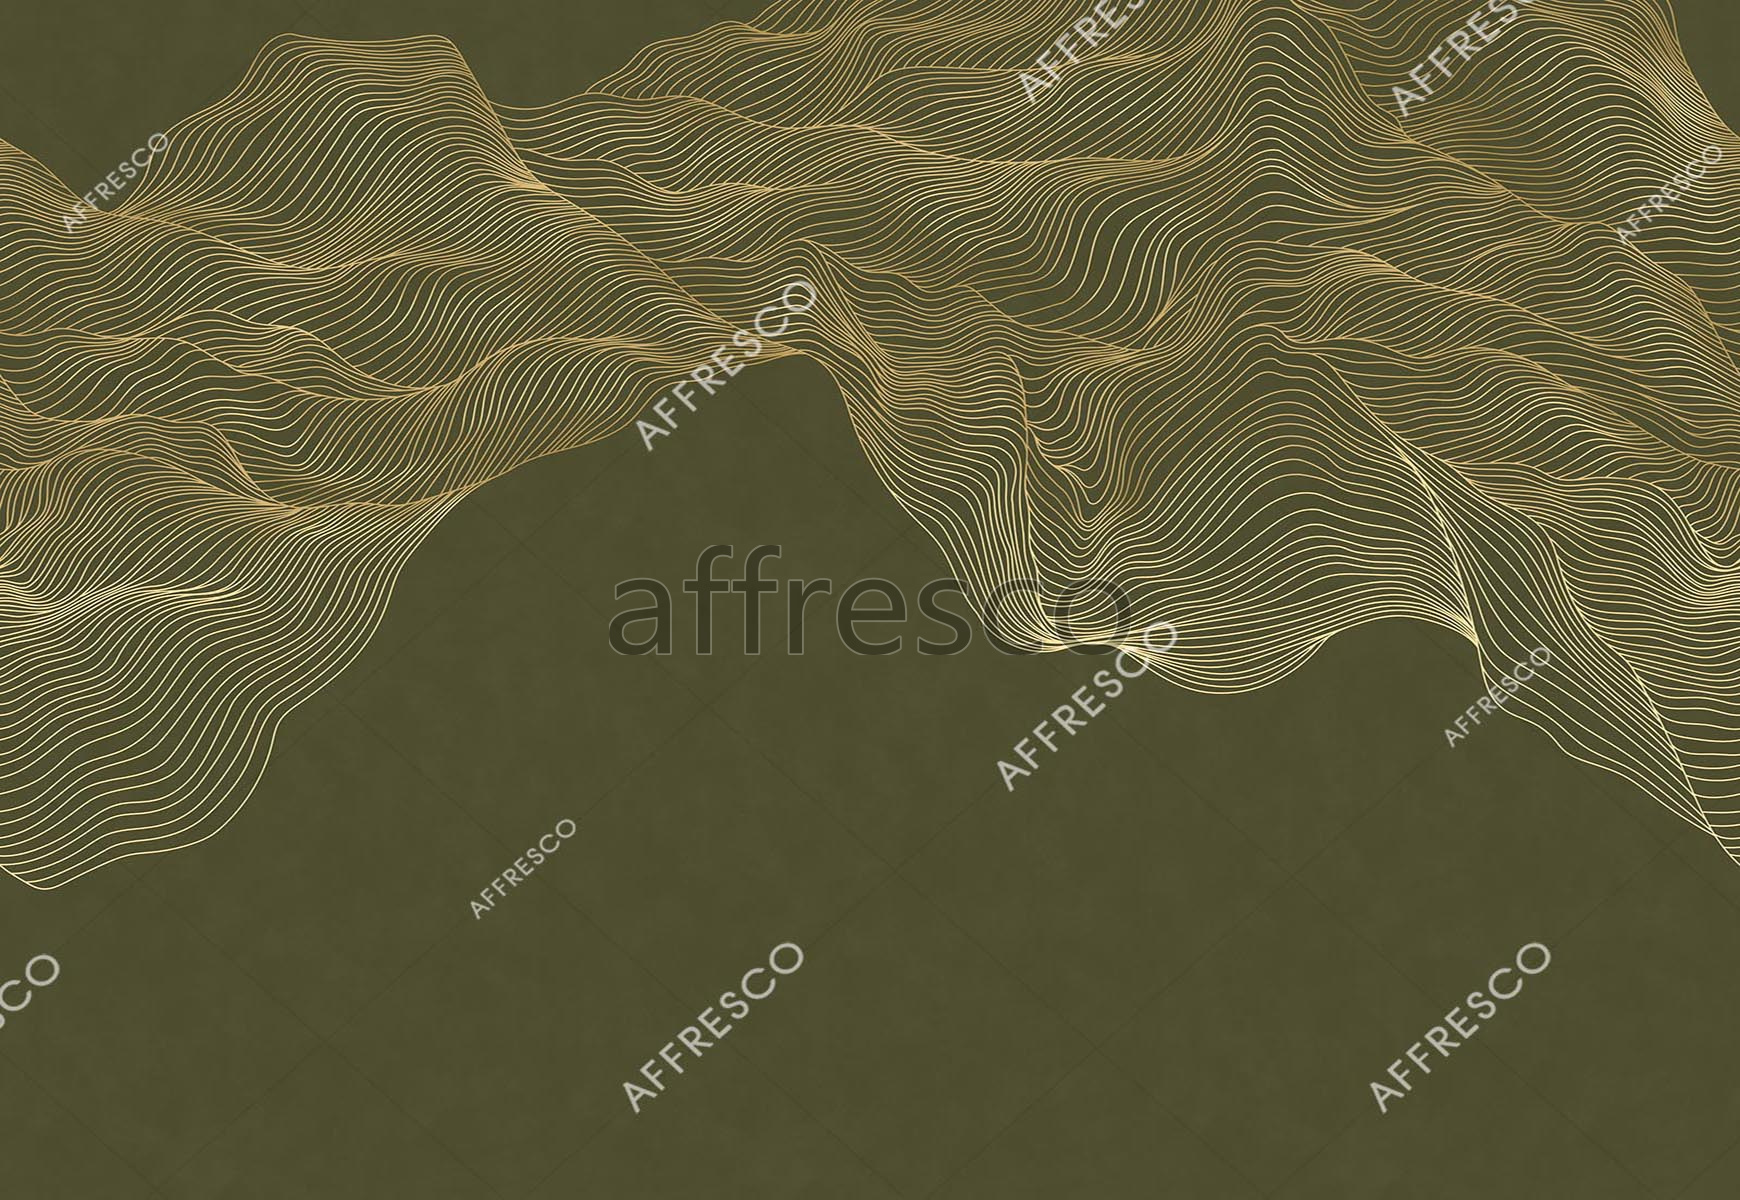 ID139149 | Textures | Monterey clouds | Affresco Factory